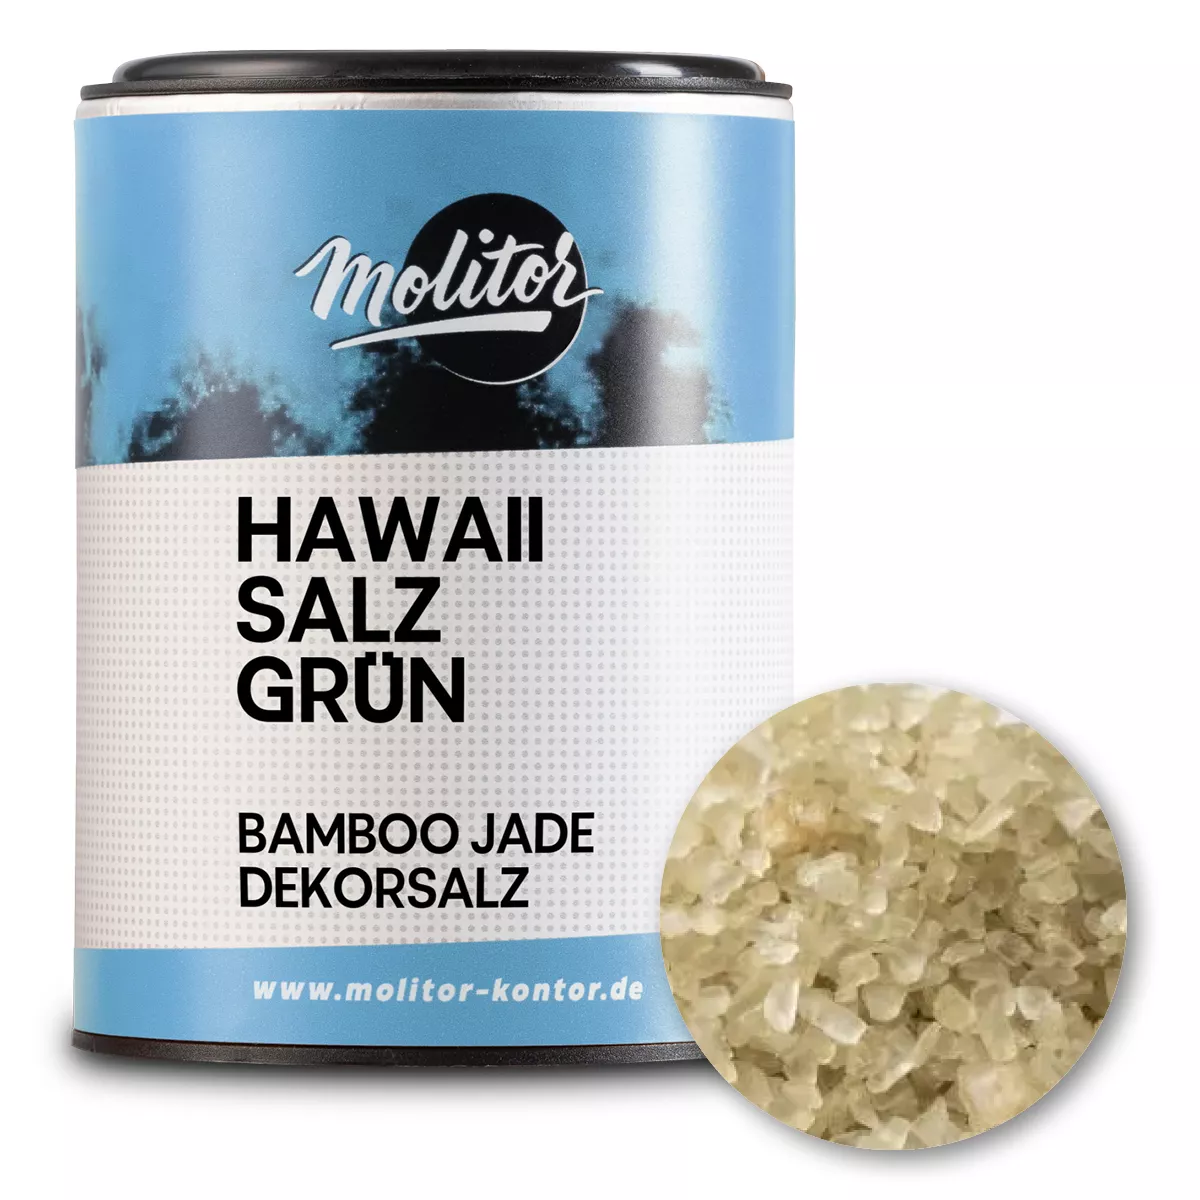 Hawaii Salz grün | Bamboo Jade - Dekorsalz